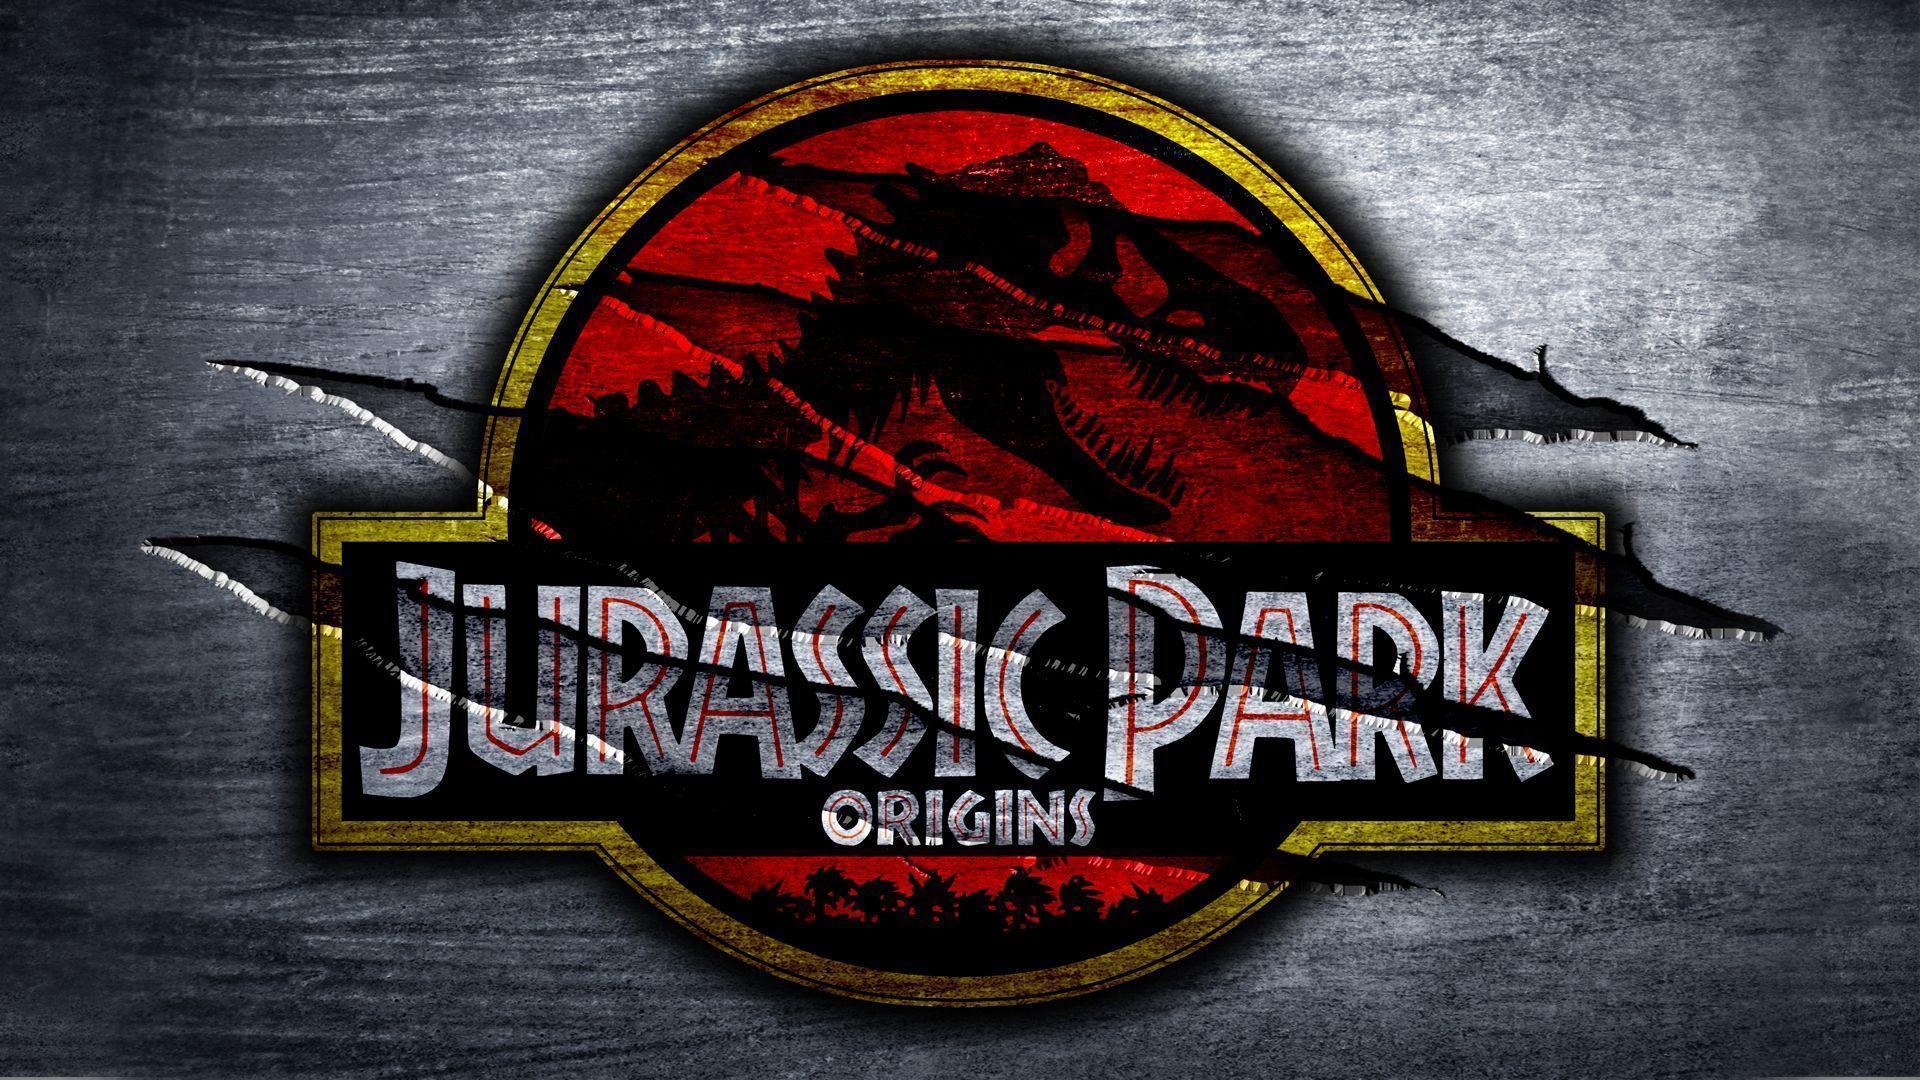 Jurassic Park Logo Background